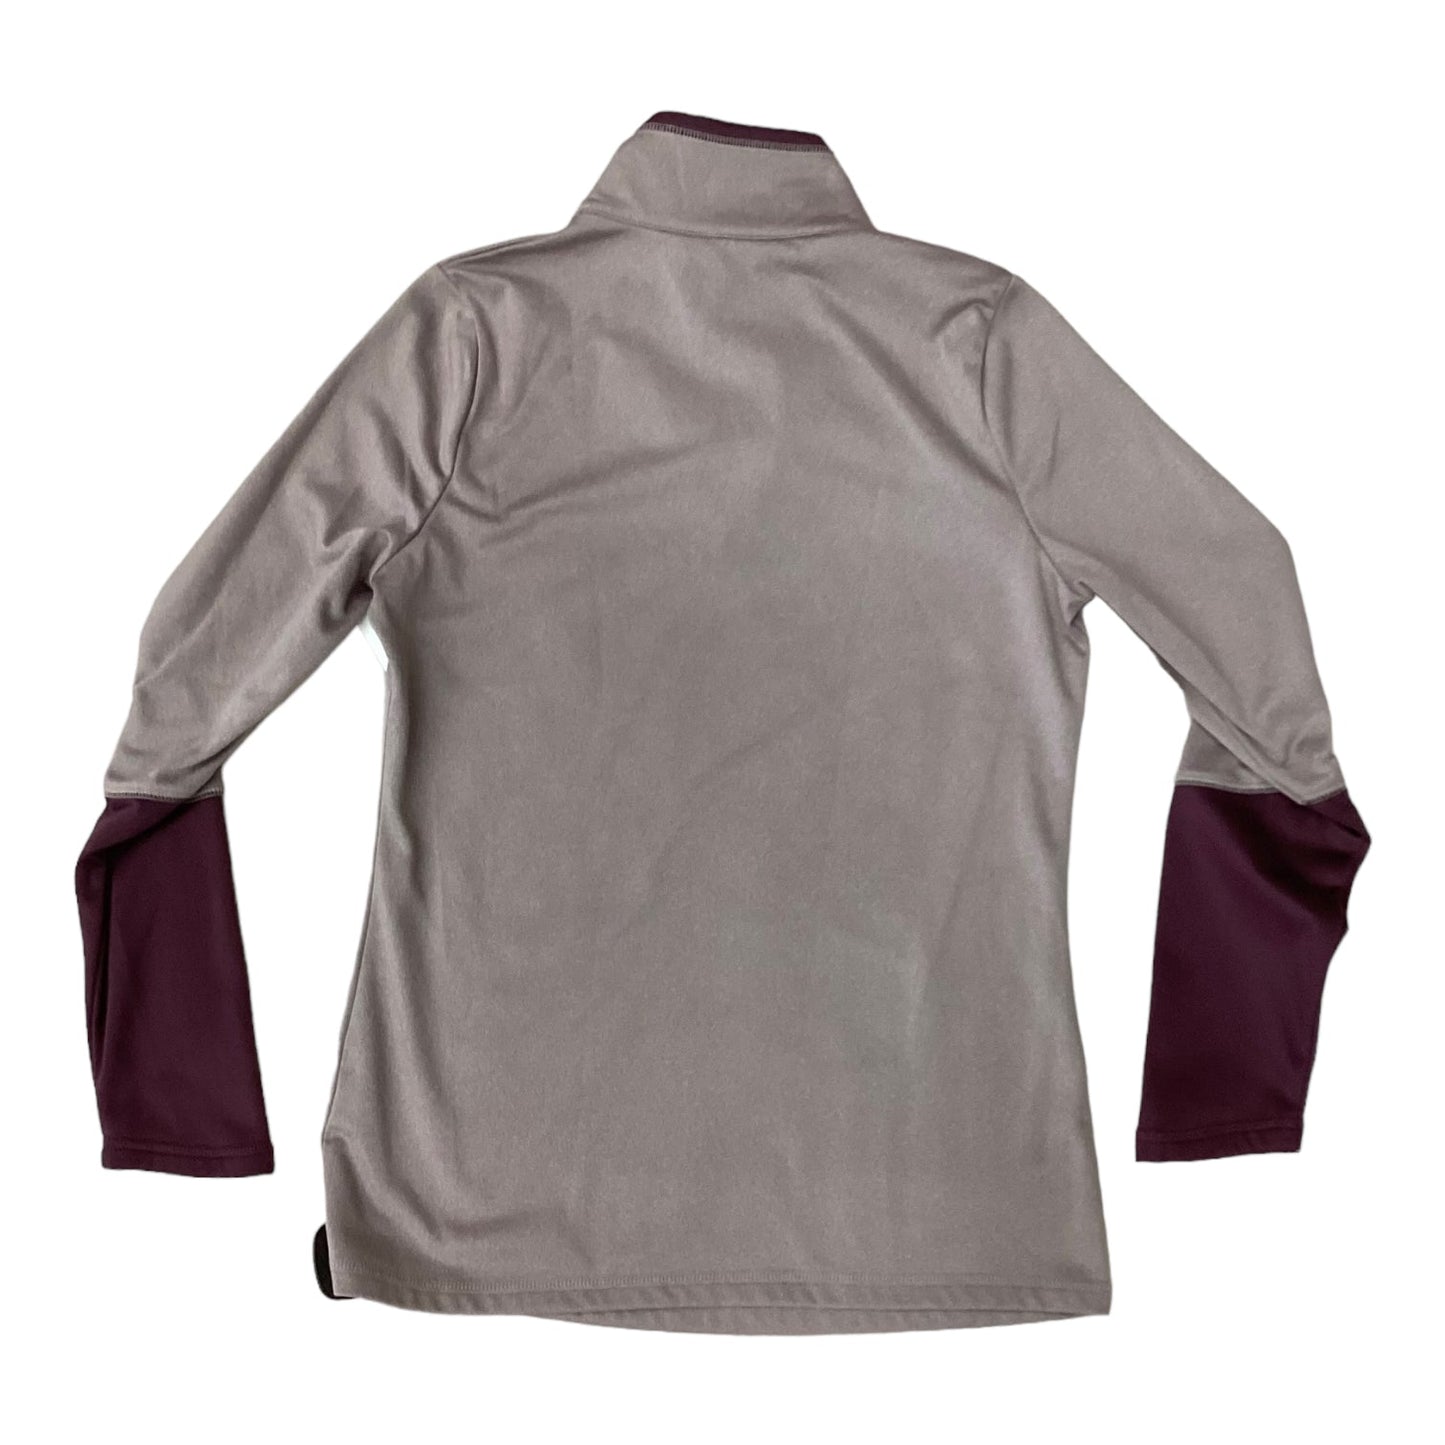 Athletic Sweatshirt Crewneck By North Face  Size: M